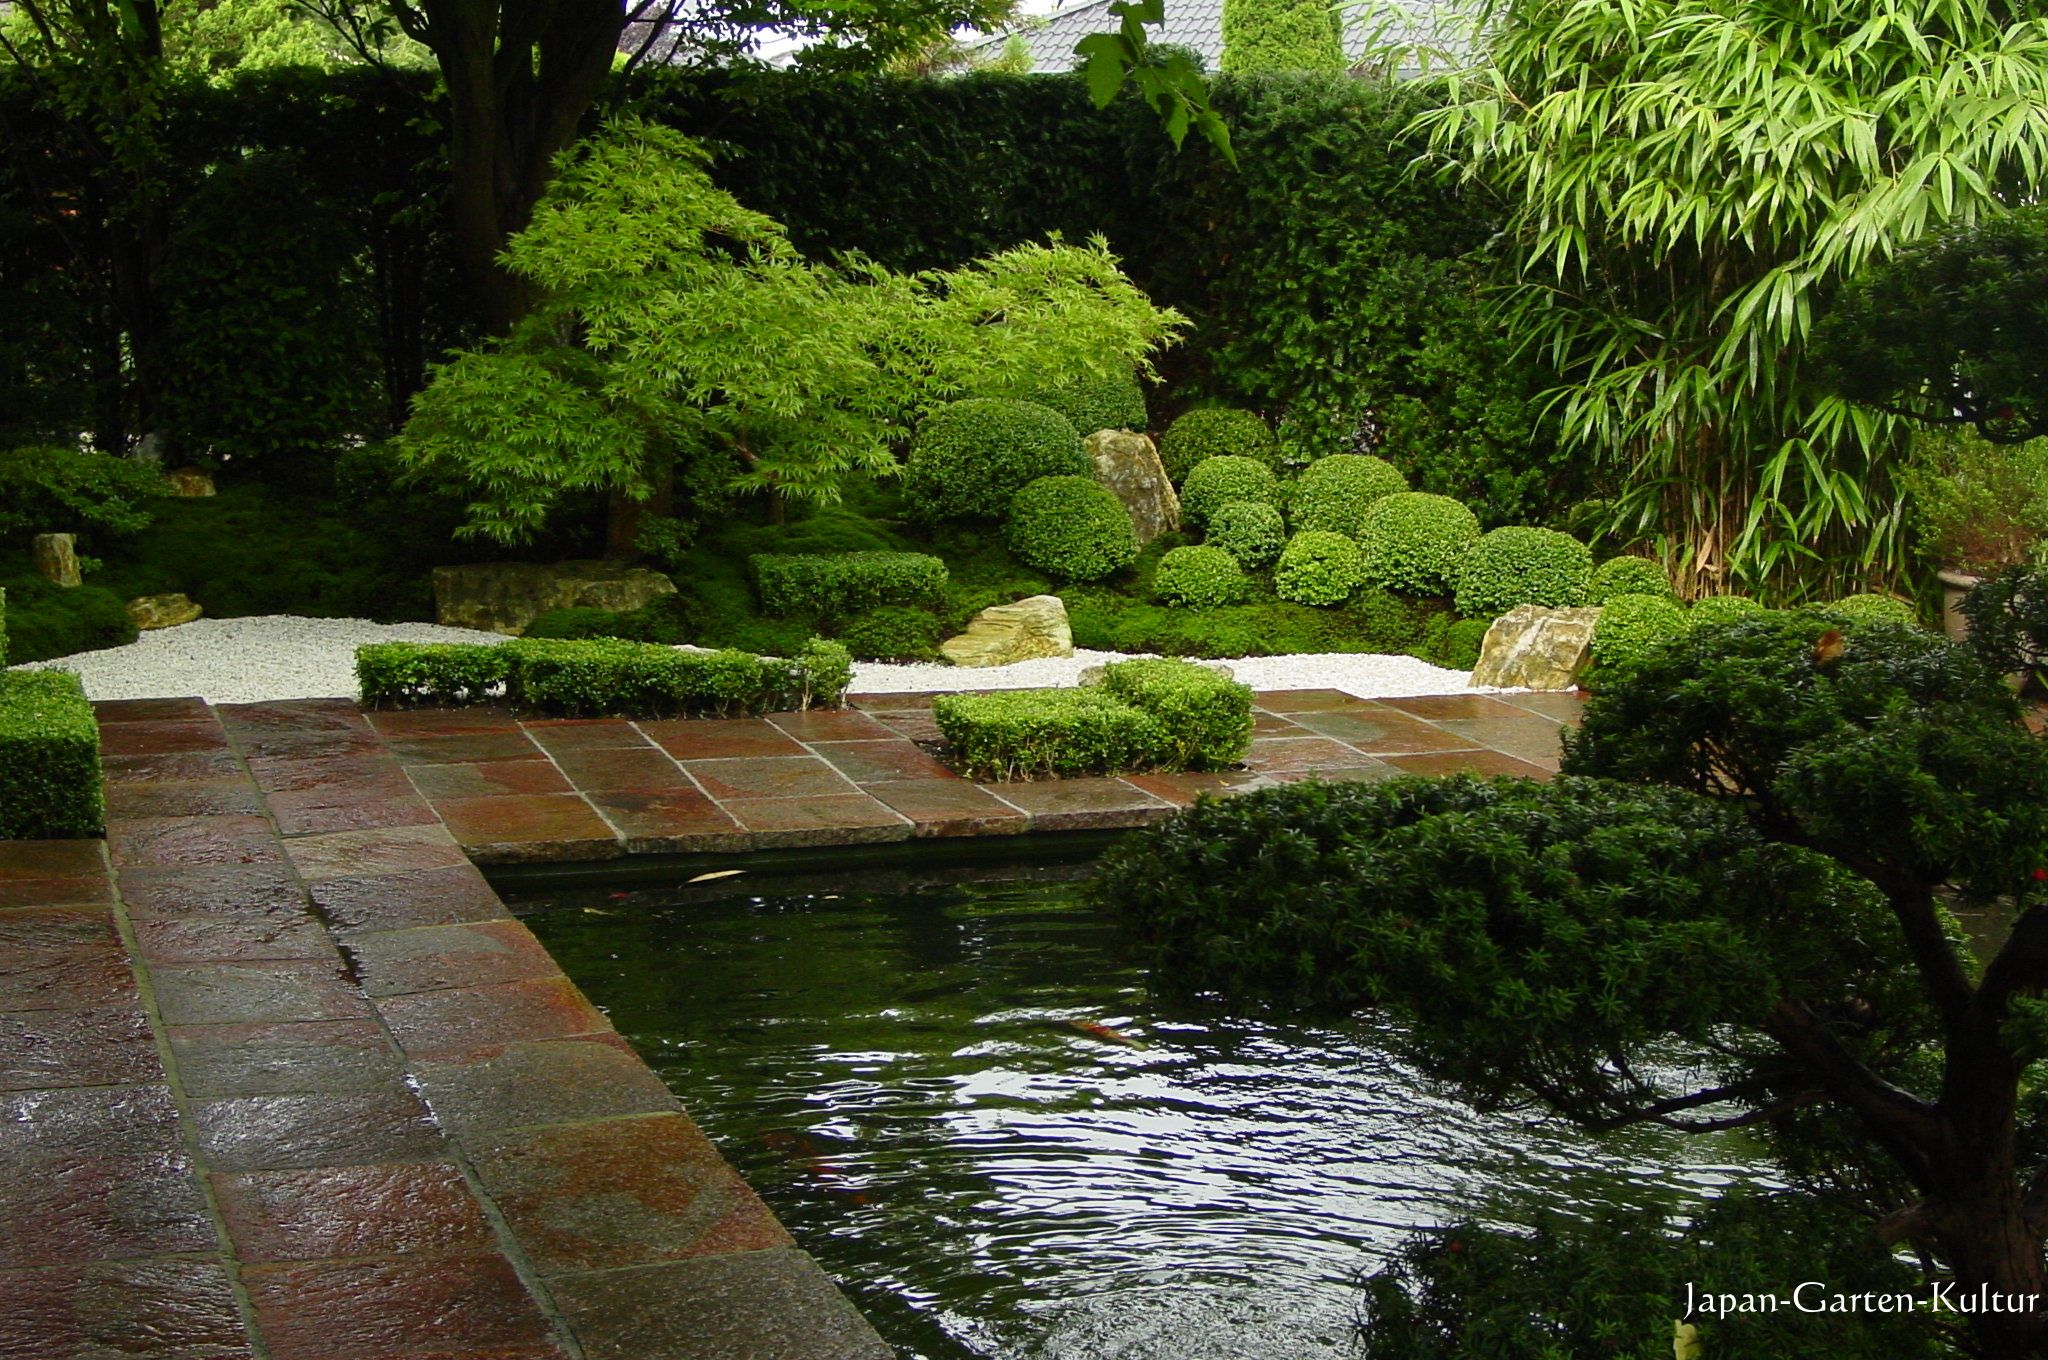 Japanische Gartengestaltung Genial sthetik Und Eleganz Das ist Japanische Gartenkunst